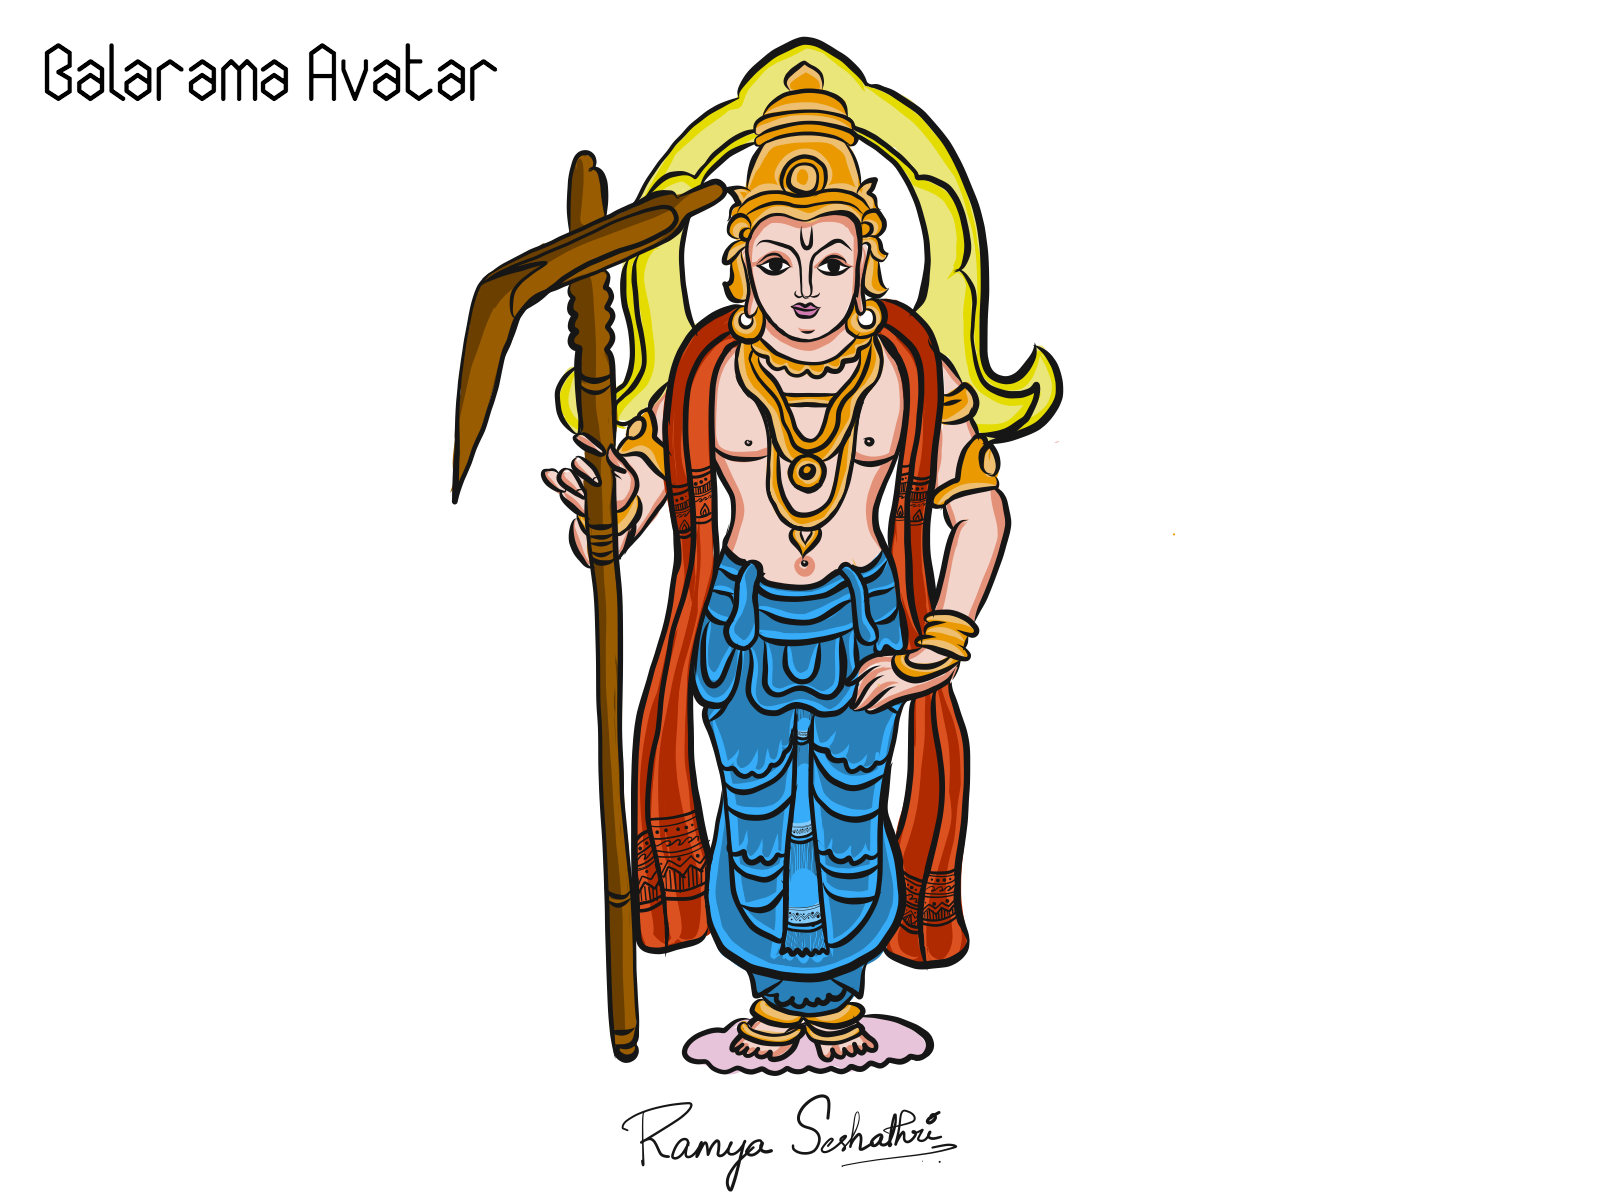 balarama avatar of vishnu